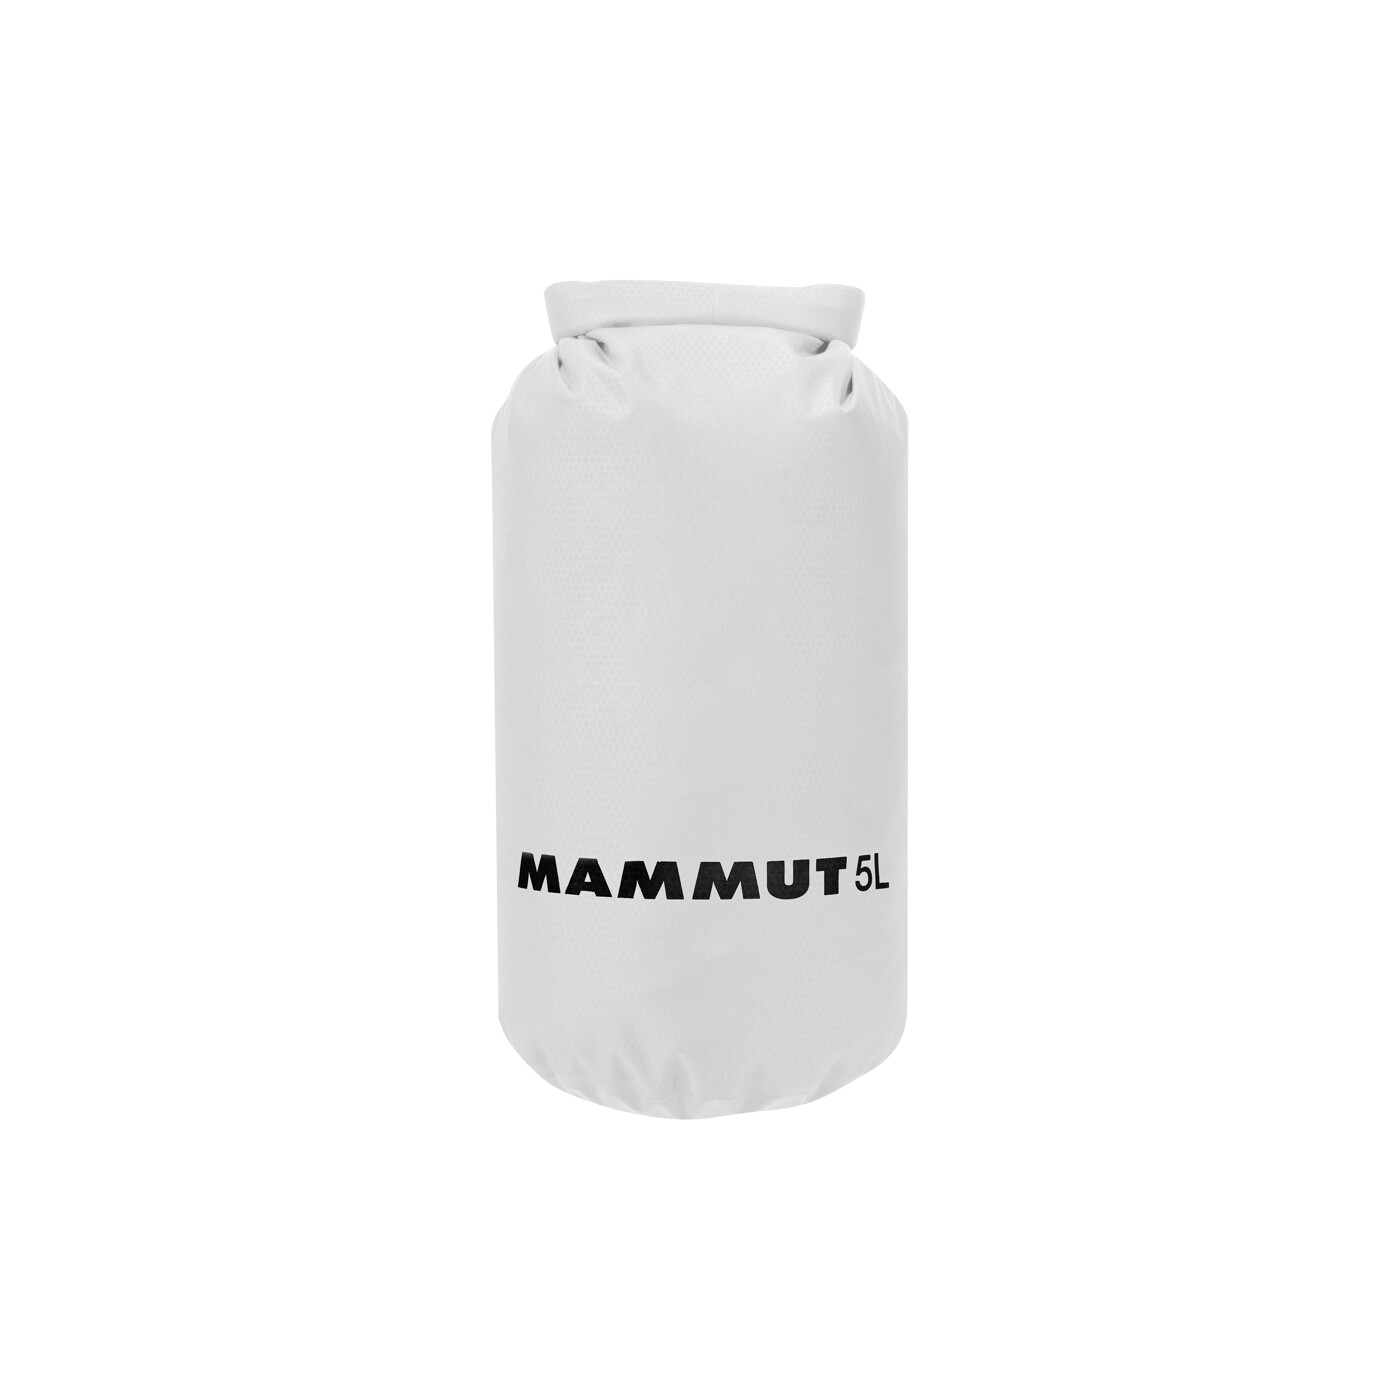 MAMMUT Drybag Light Robuster wasserdichter Packsack